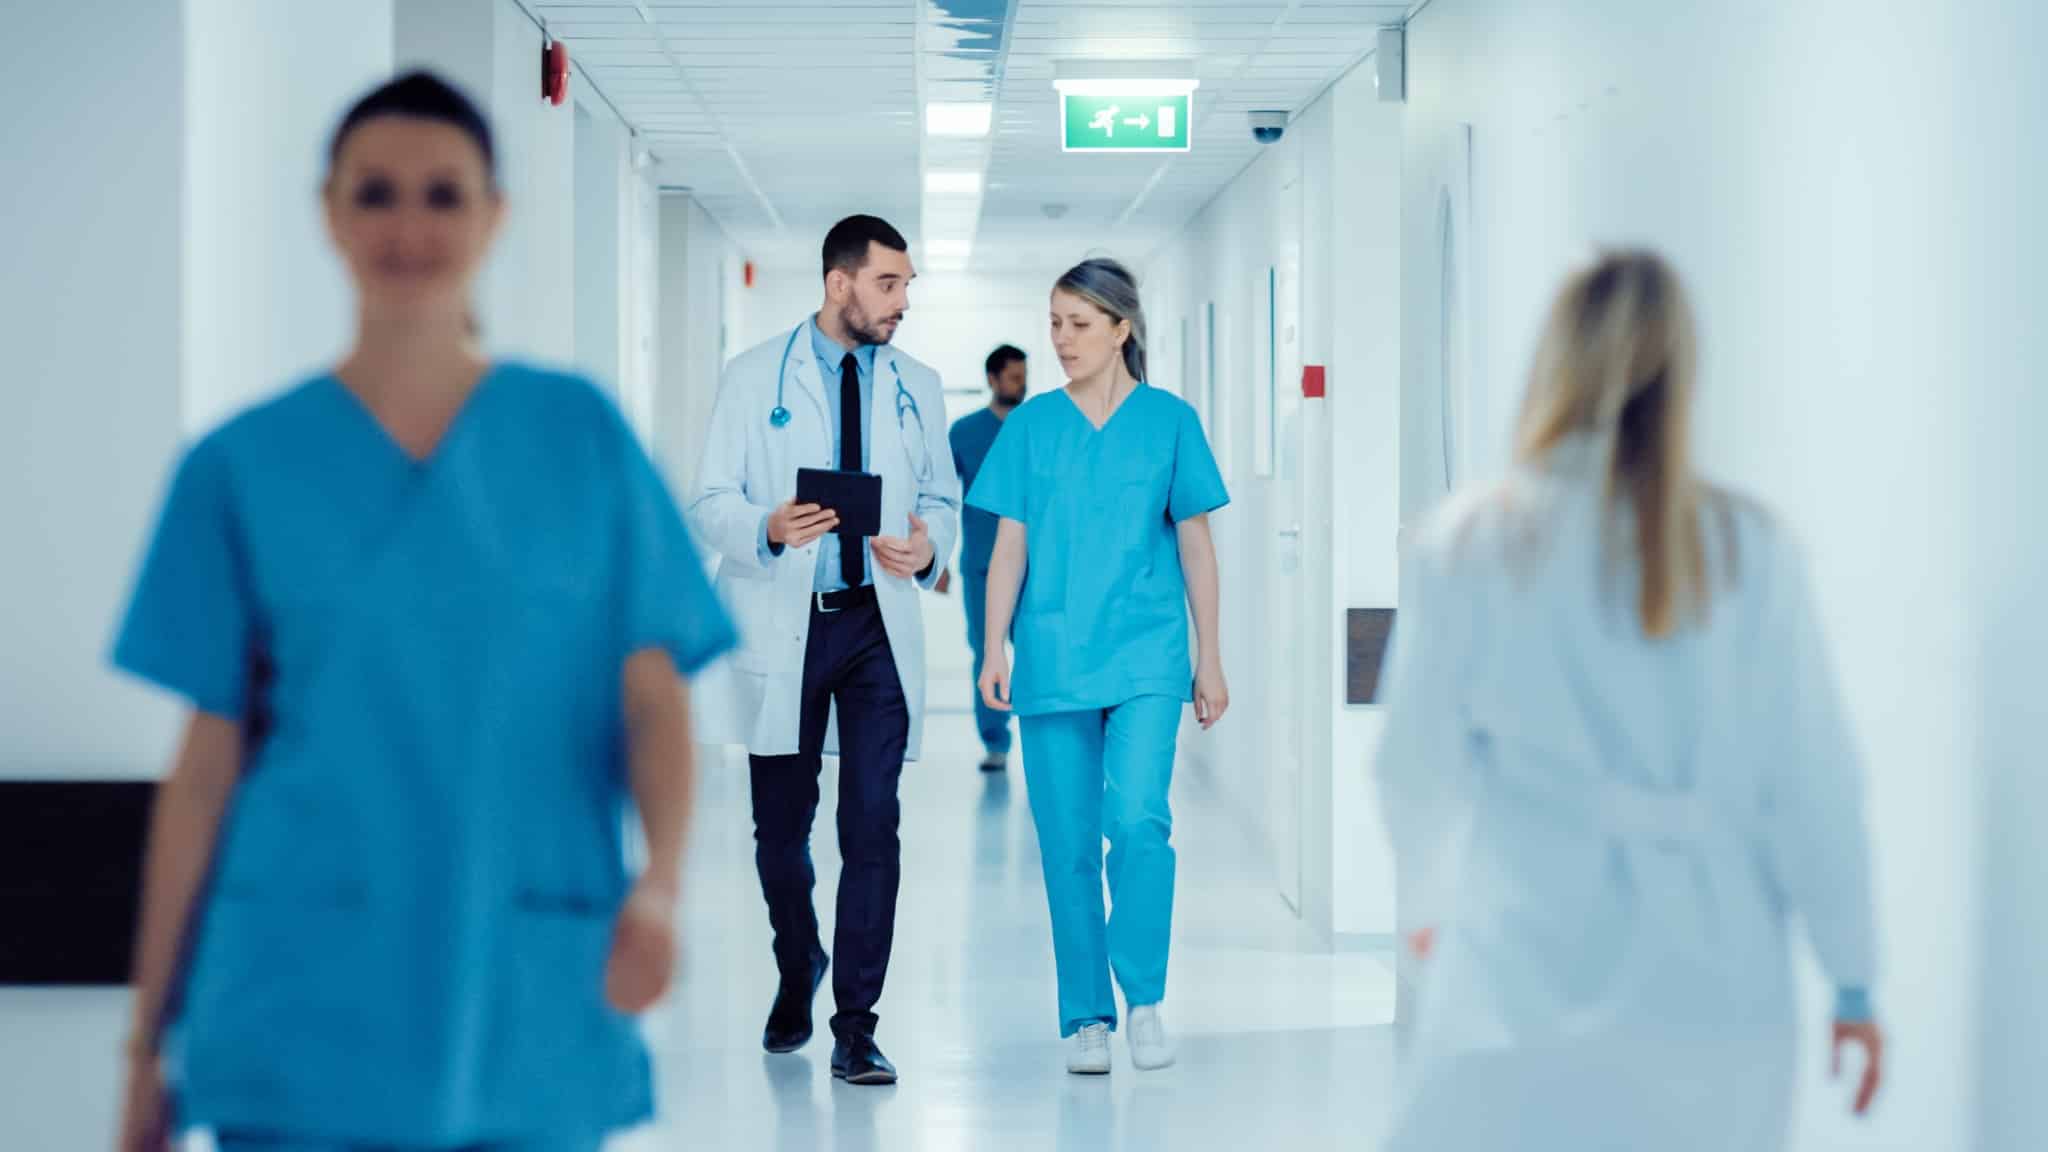 Medical professionals in a hospital hallway